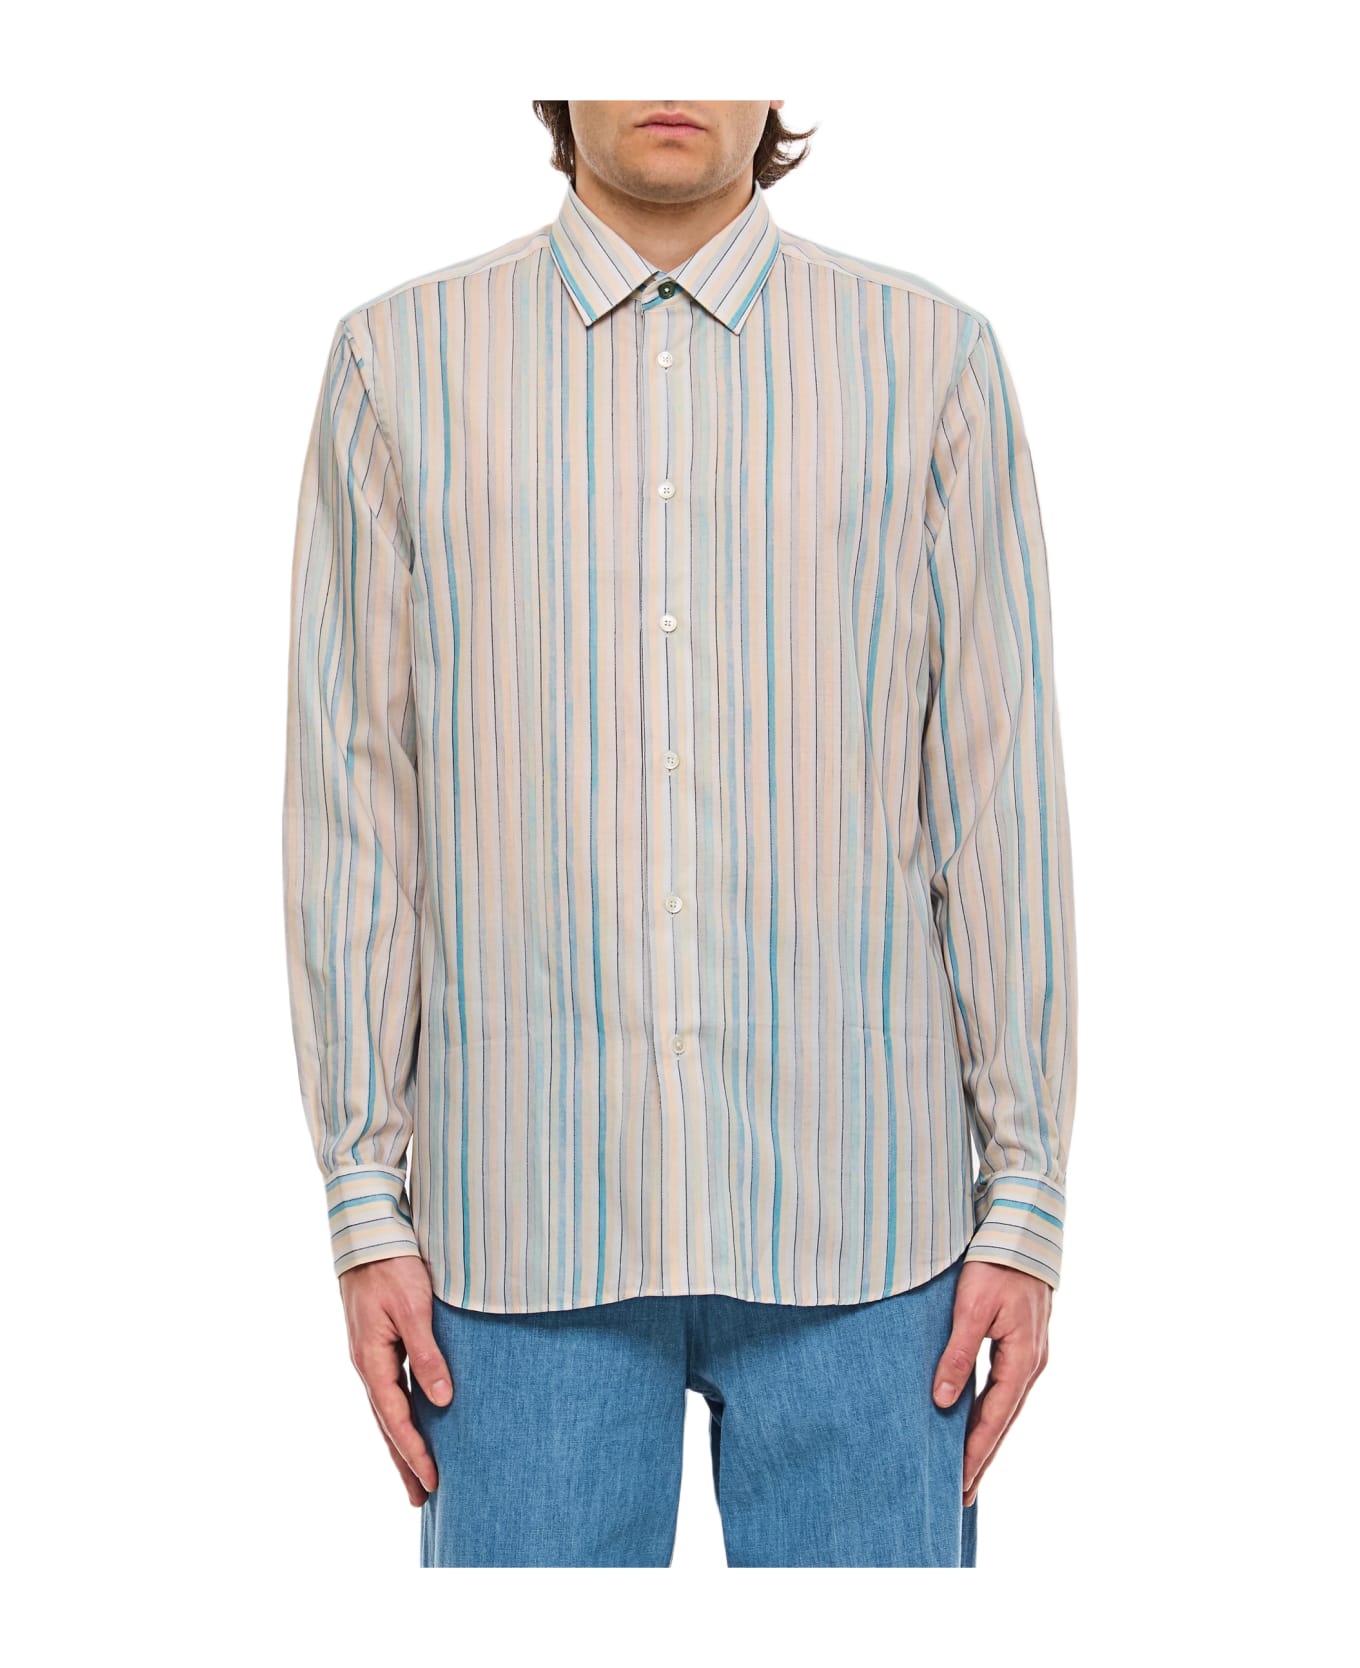 Paul Smith Mens S/c Tailored Fit Shirt - Panna azzurro シャツ